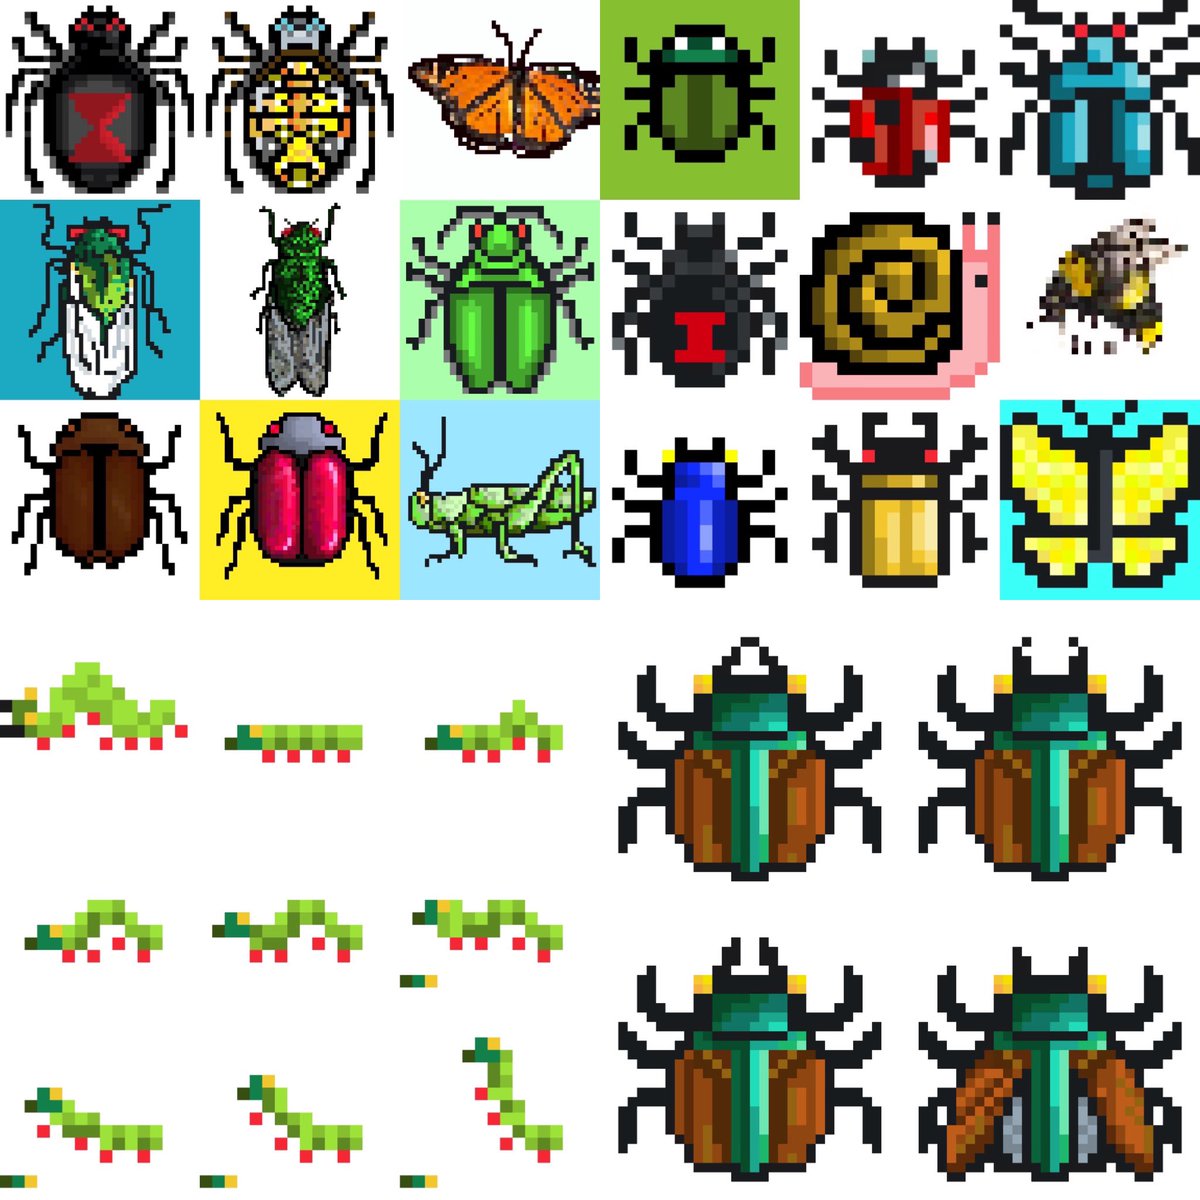 I do be liking bugs tbh 🪲🐛🦋🐝🐞 

#pixelart #pixelartist #pixelartchallenge #8bitart #spriteart #bugs #insects #insect #pixelartNFT #NFTartist #PixelArtCommunity #pixelartoftheday #bugart #insectart